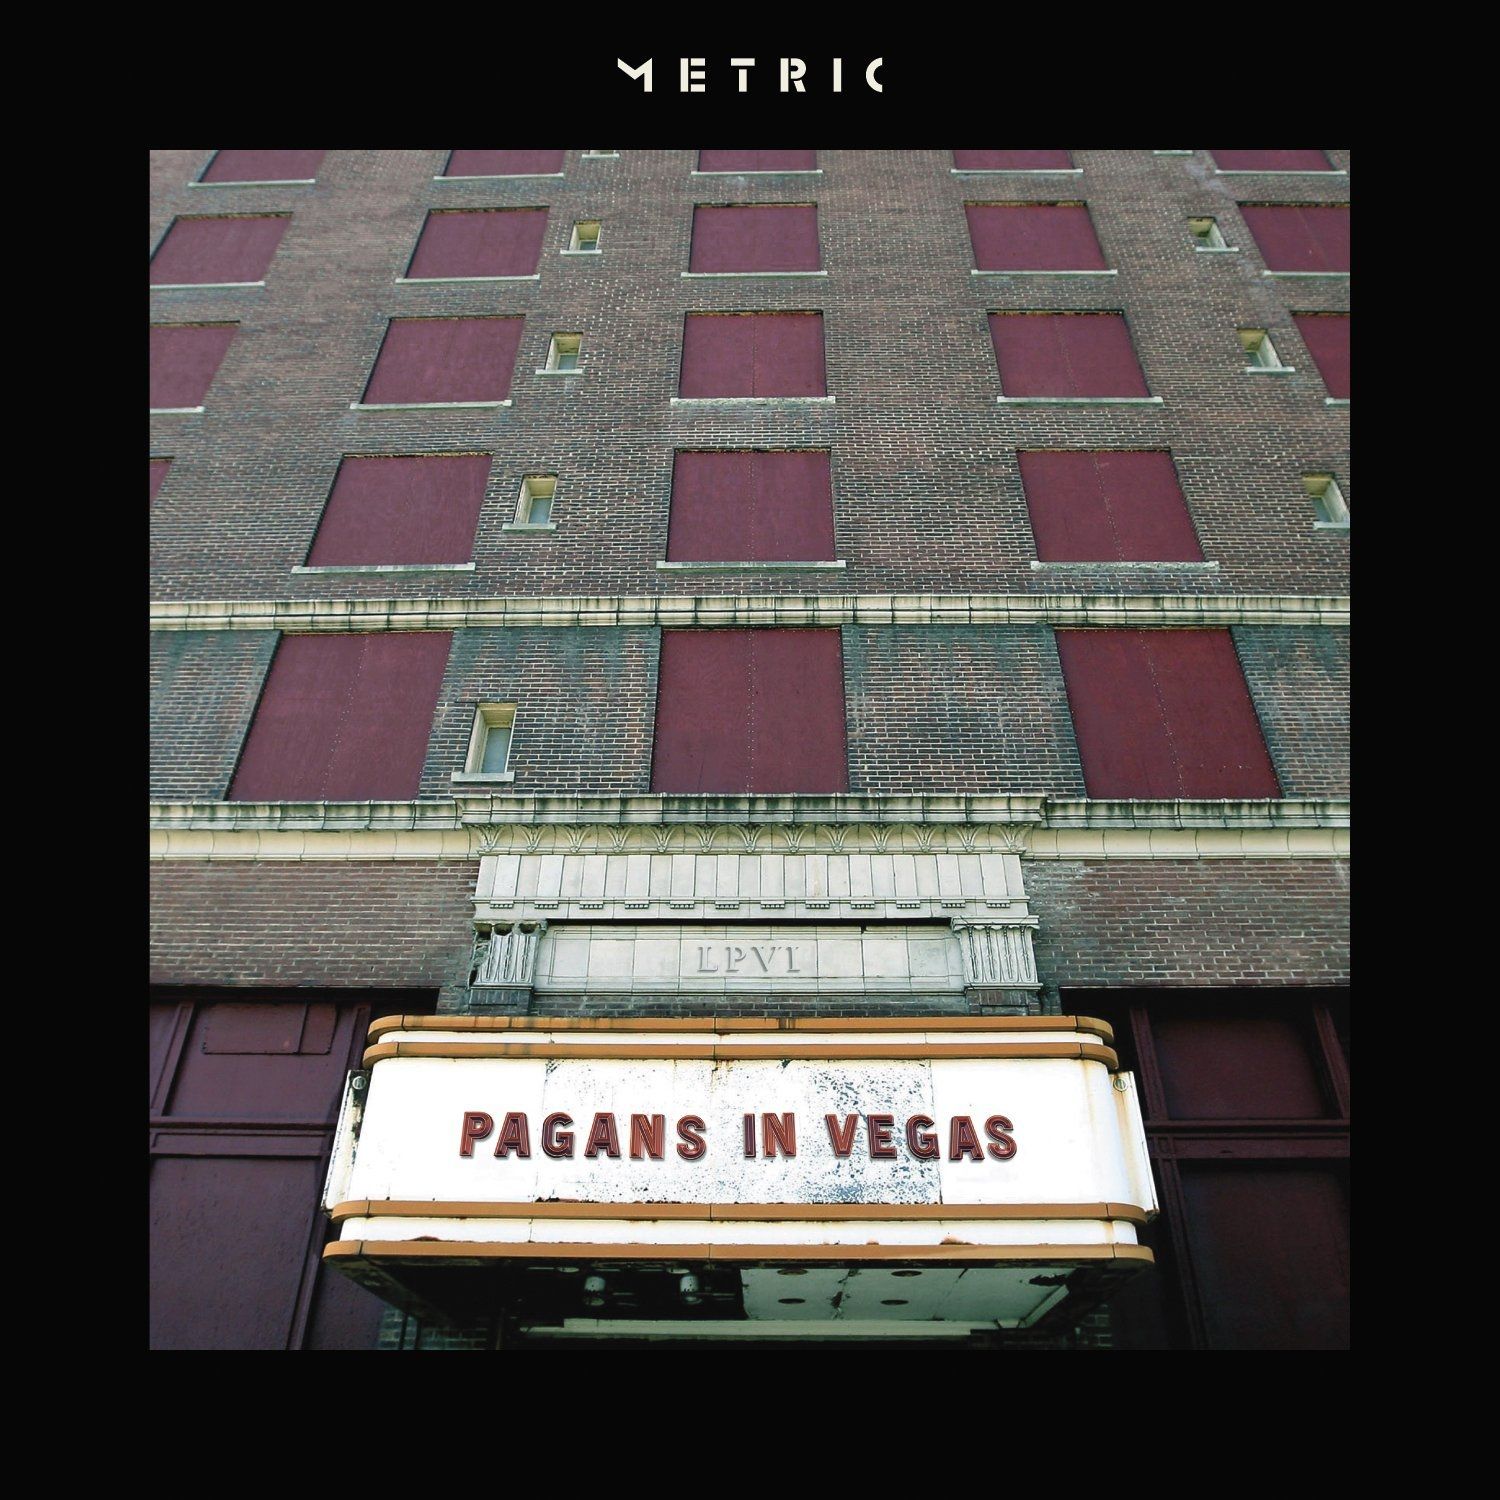 Imagem do álbum Pagans In Vegas do(a) artista Metric